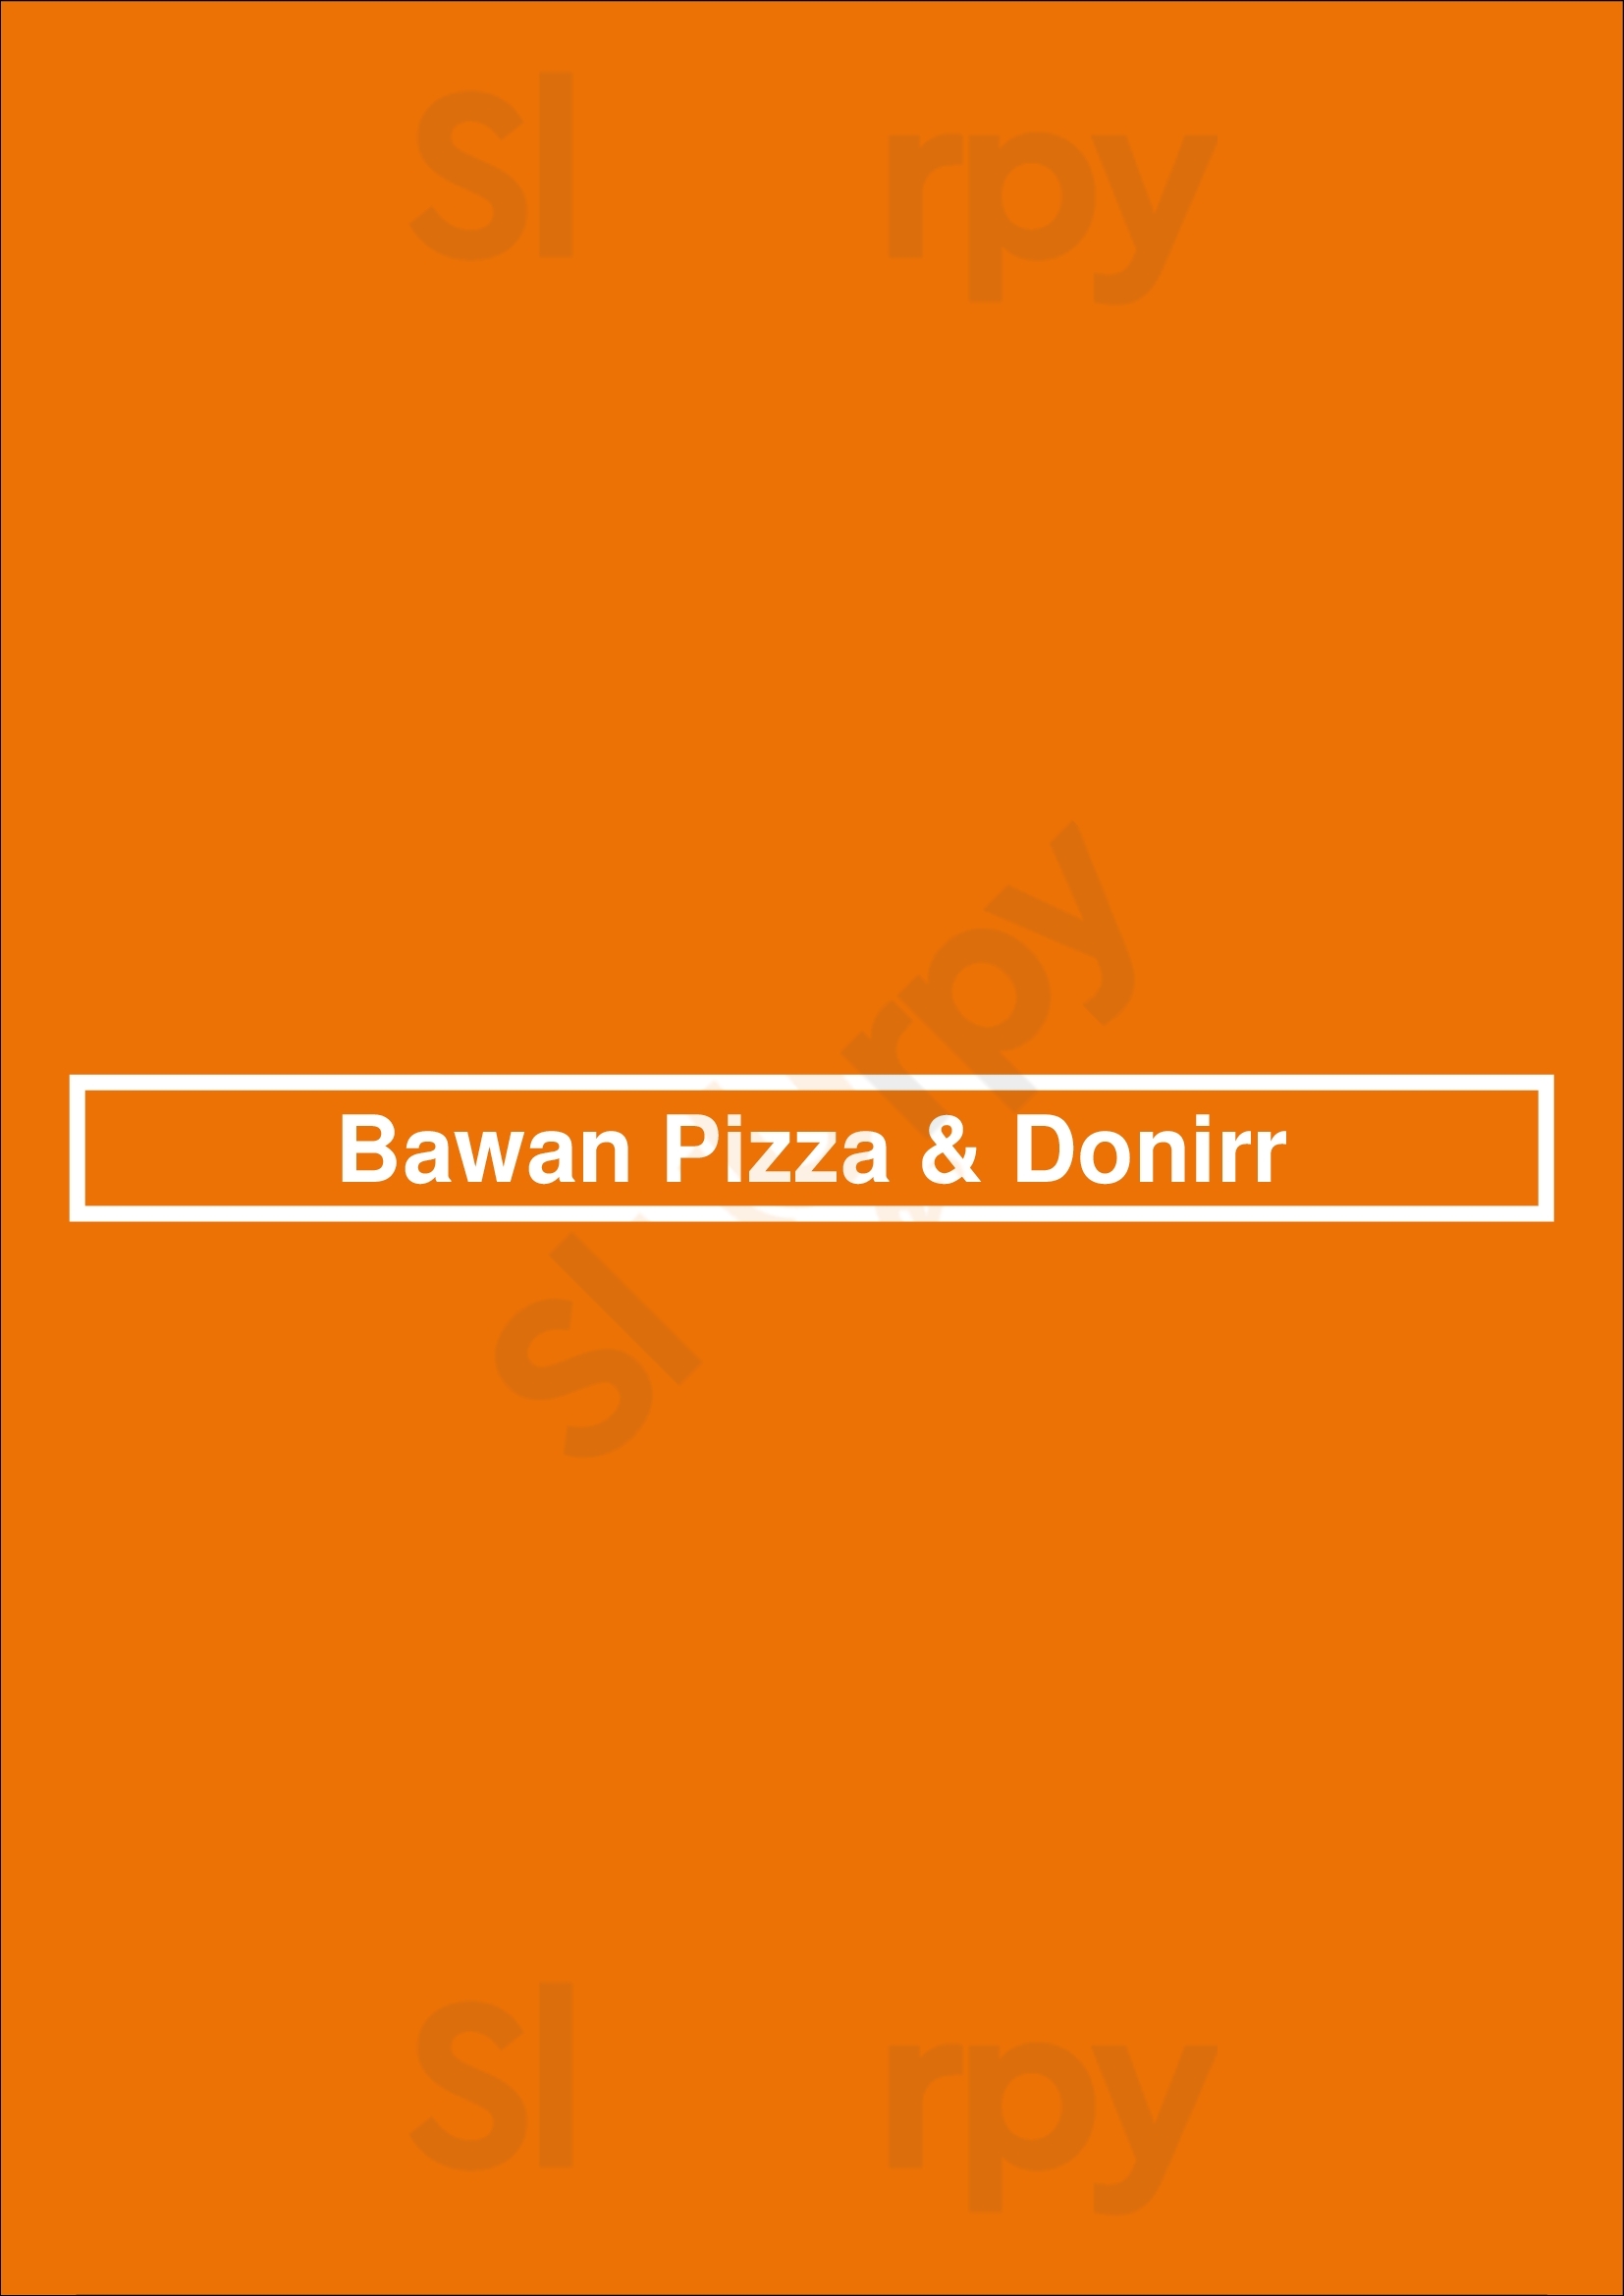 Bawan Pizza & Donirr Vancouver Menu - 1